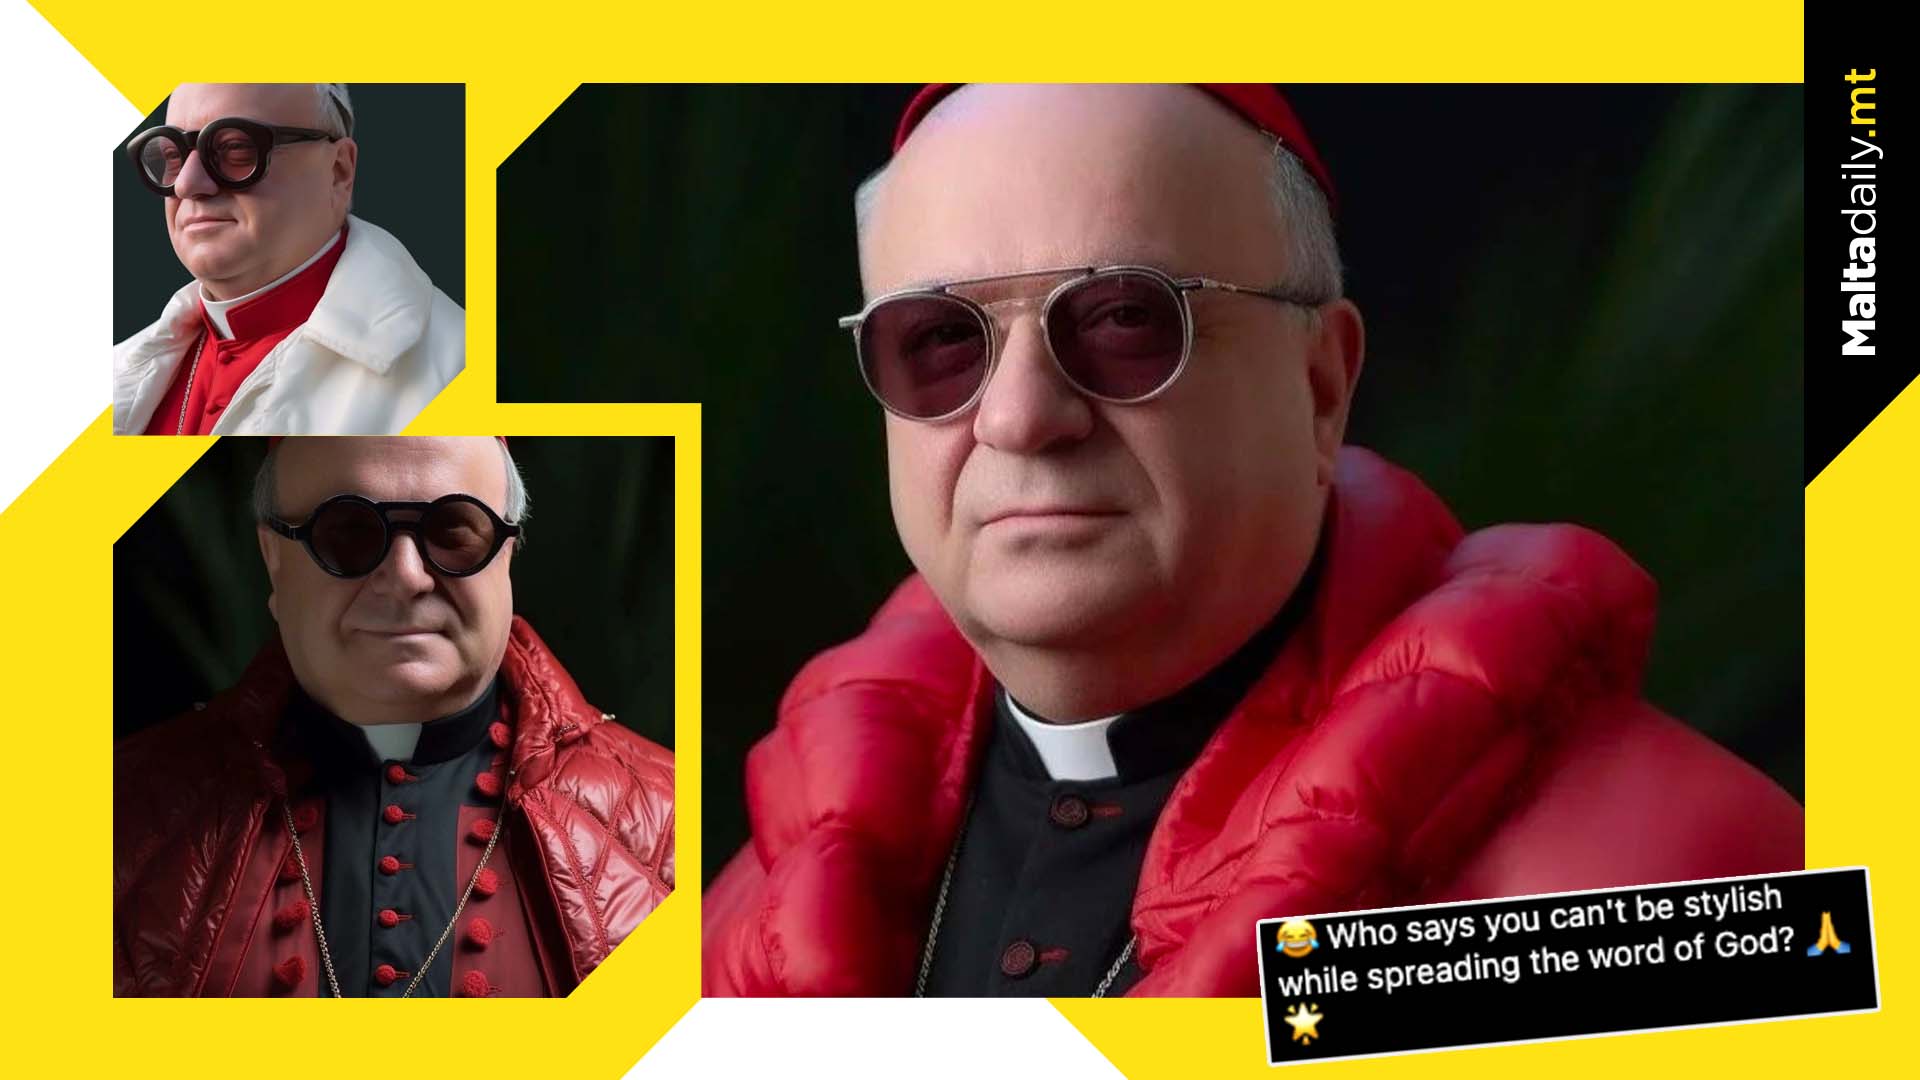 Malta's archbishop wears Balenciaga in new AI generated images